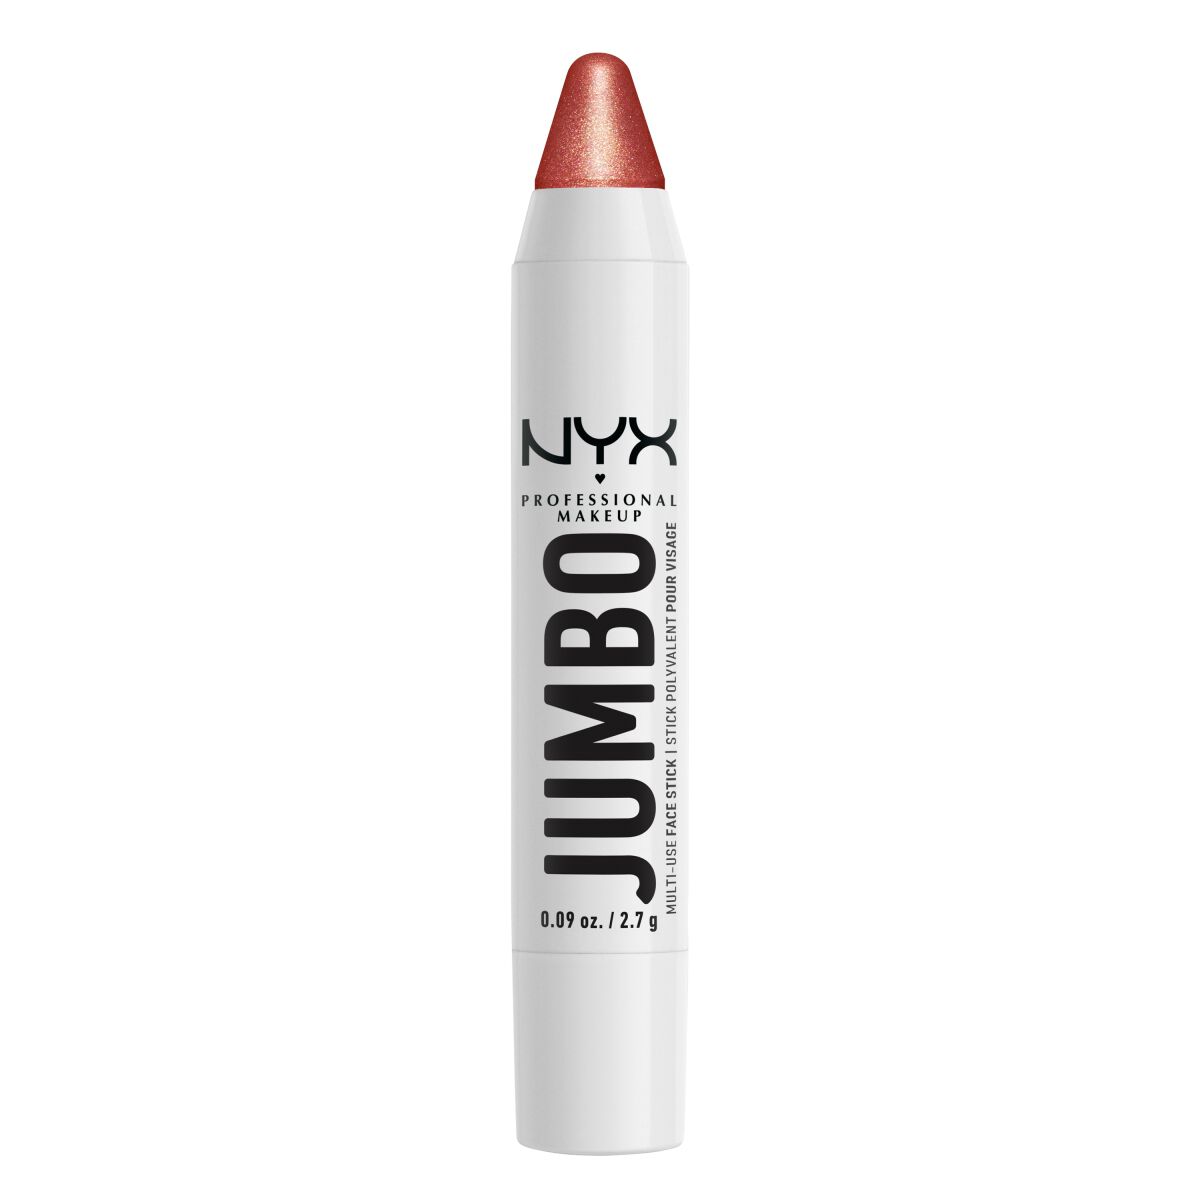 Хайлайтер-карандаш для лица с лимонным безе Nyx Professional Makeup Jumbo Highlighter Stick, 2,7 гр